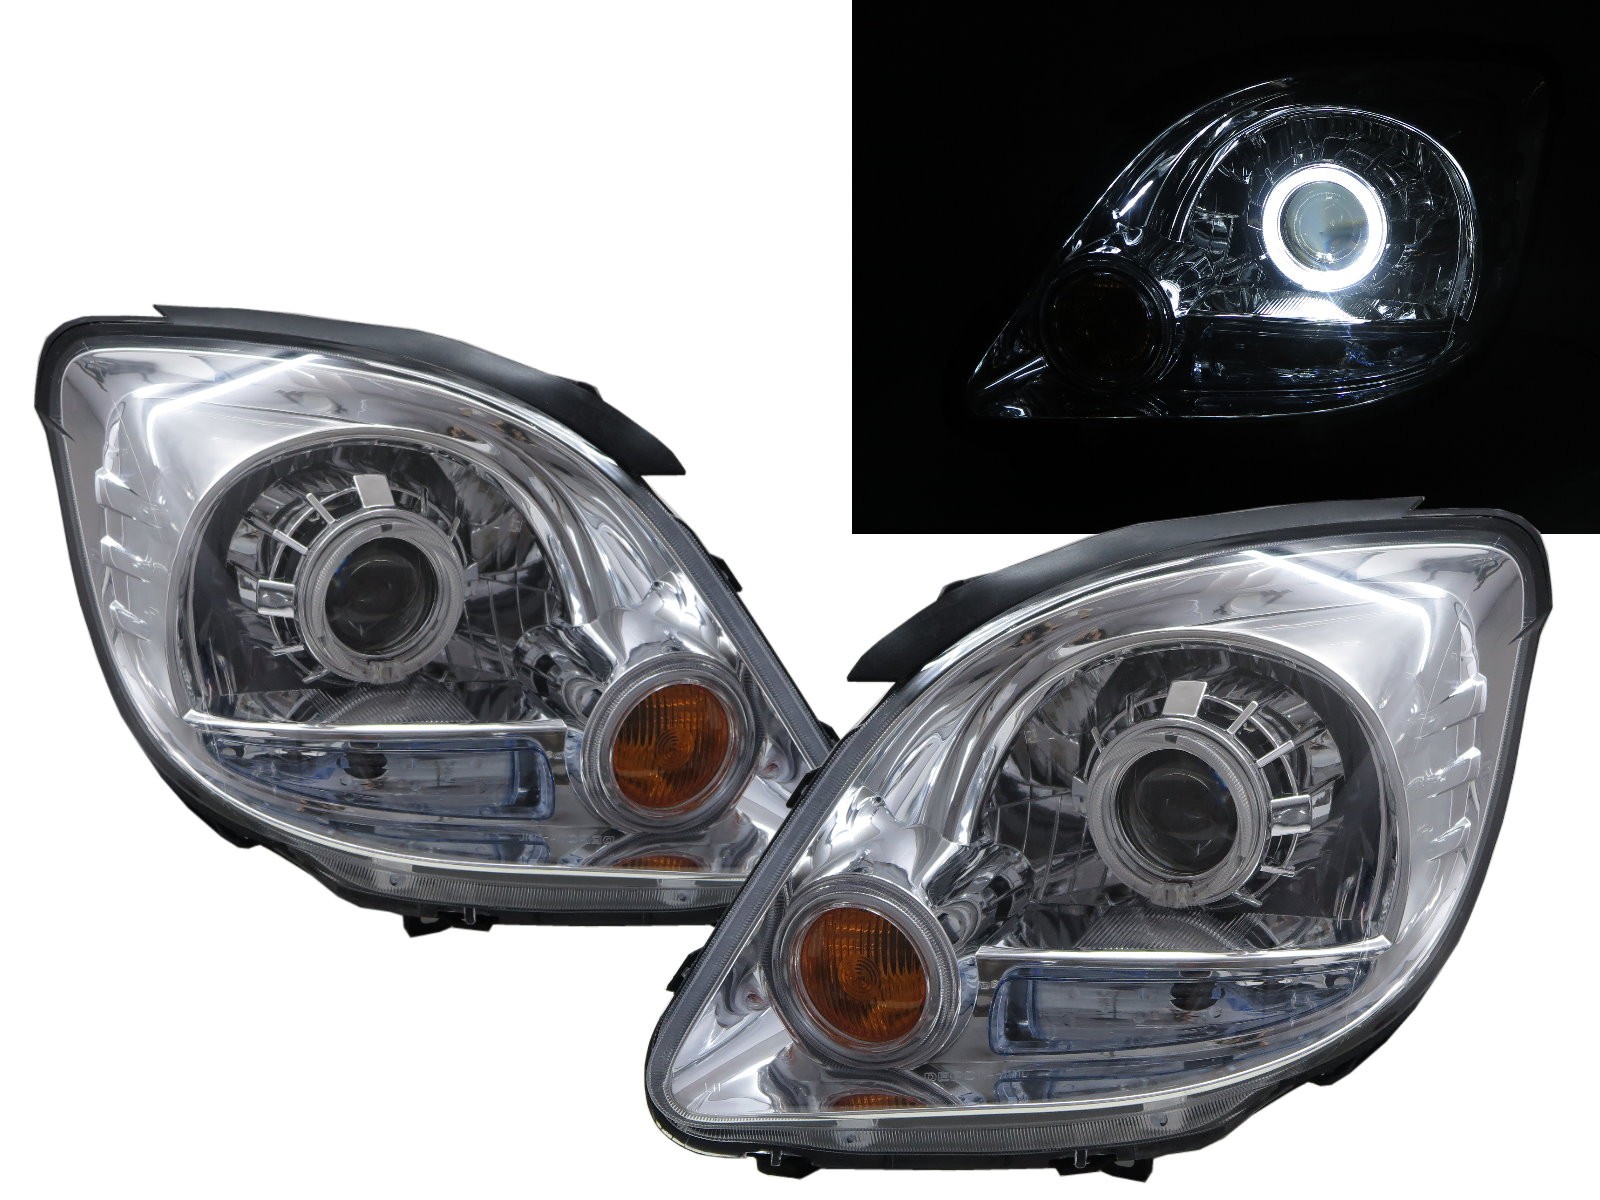 CrazyTheGod Adventure 2004-2008 Wagon/Truck 2D/5D Guide LED Angel-Eye Projector Headlight Headlamp Chrome for Mitsubishi LHD